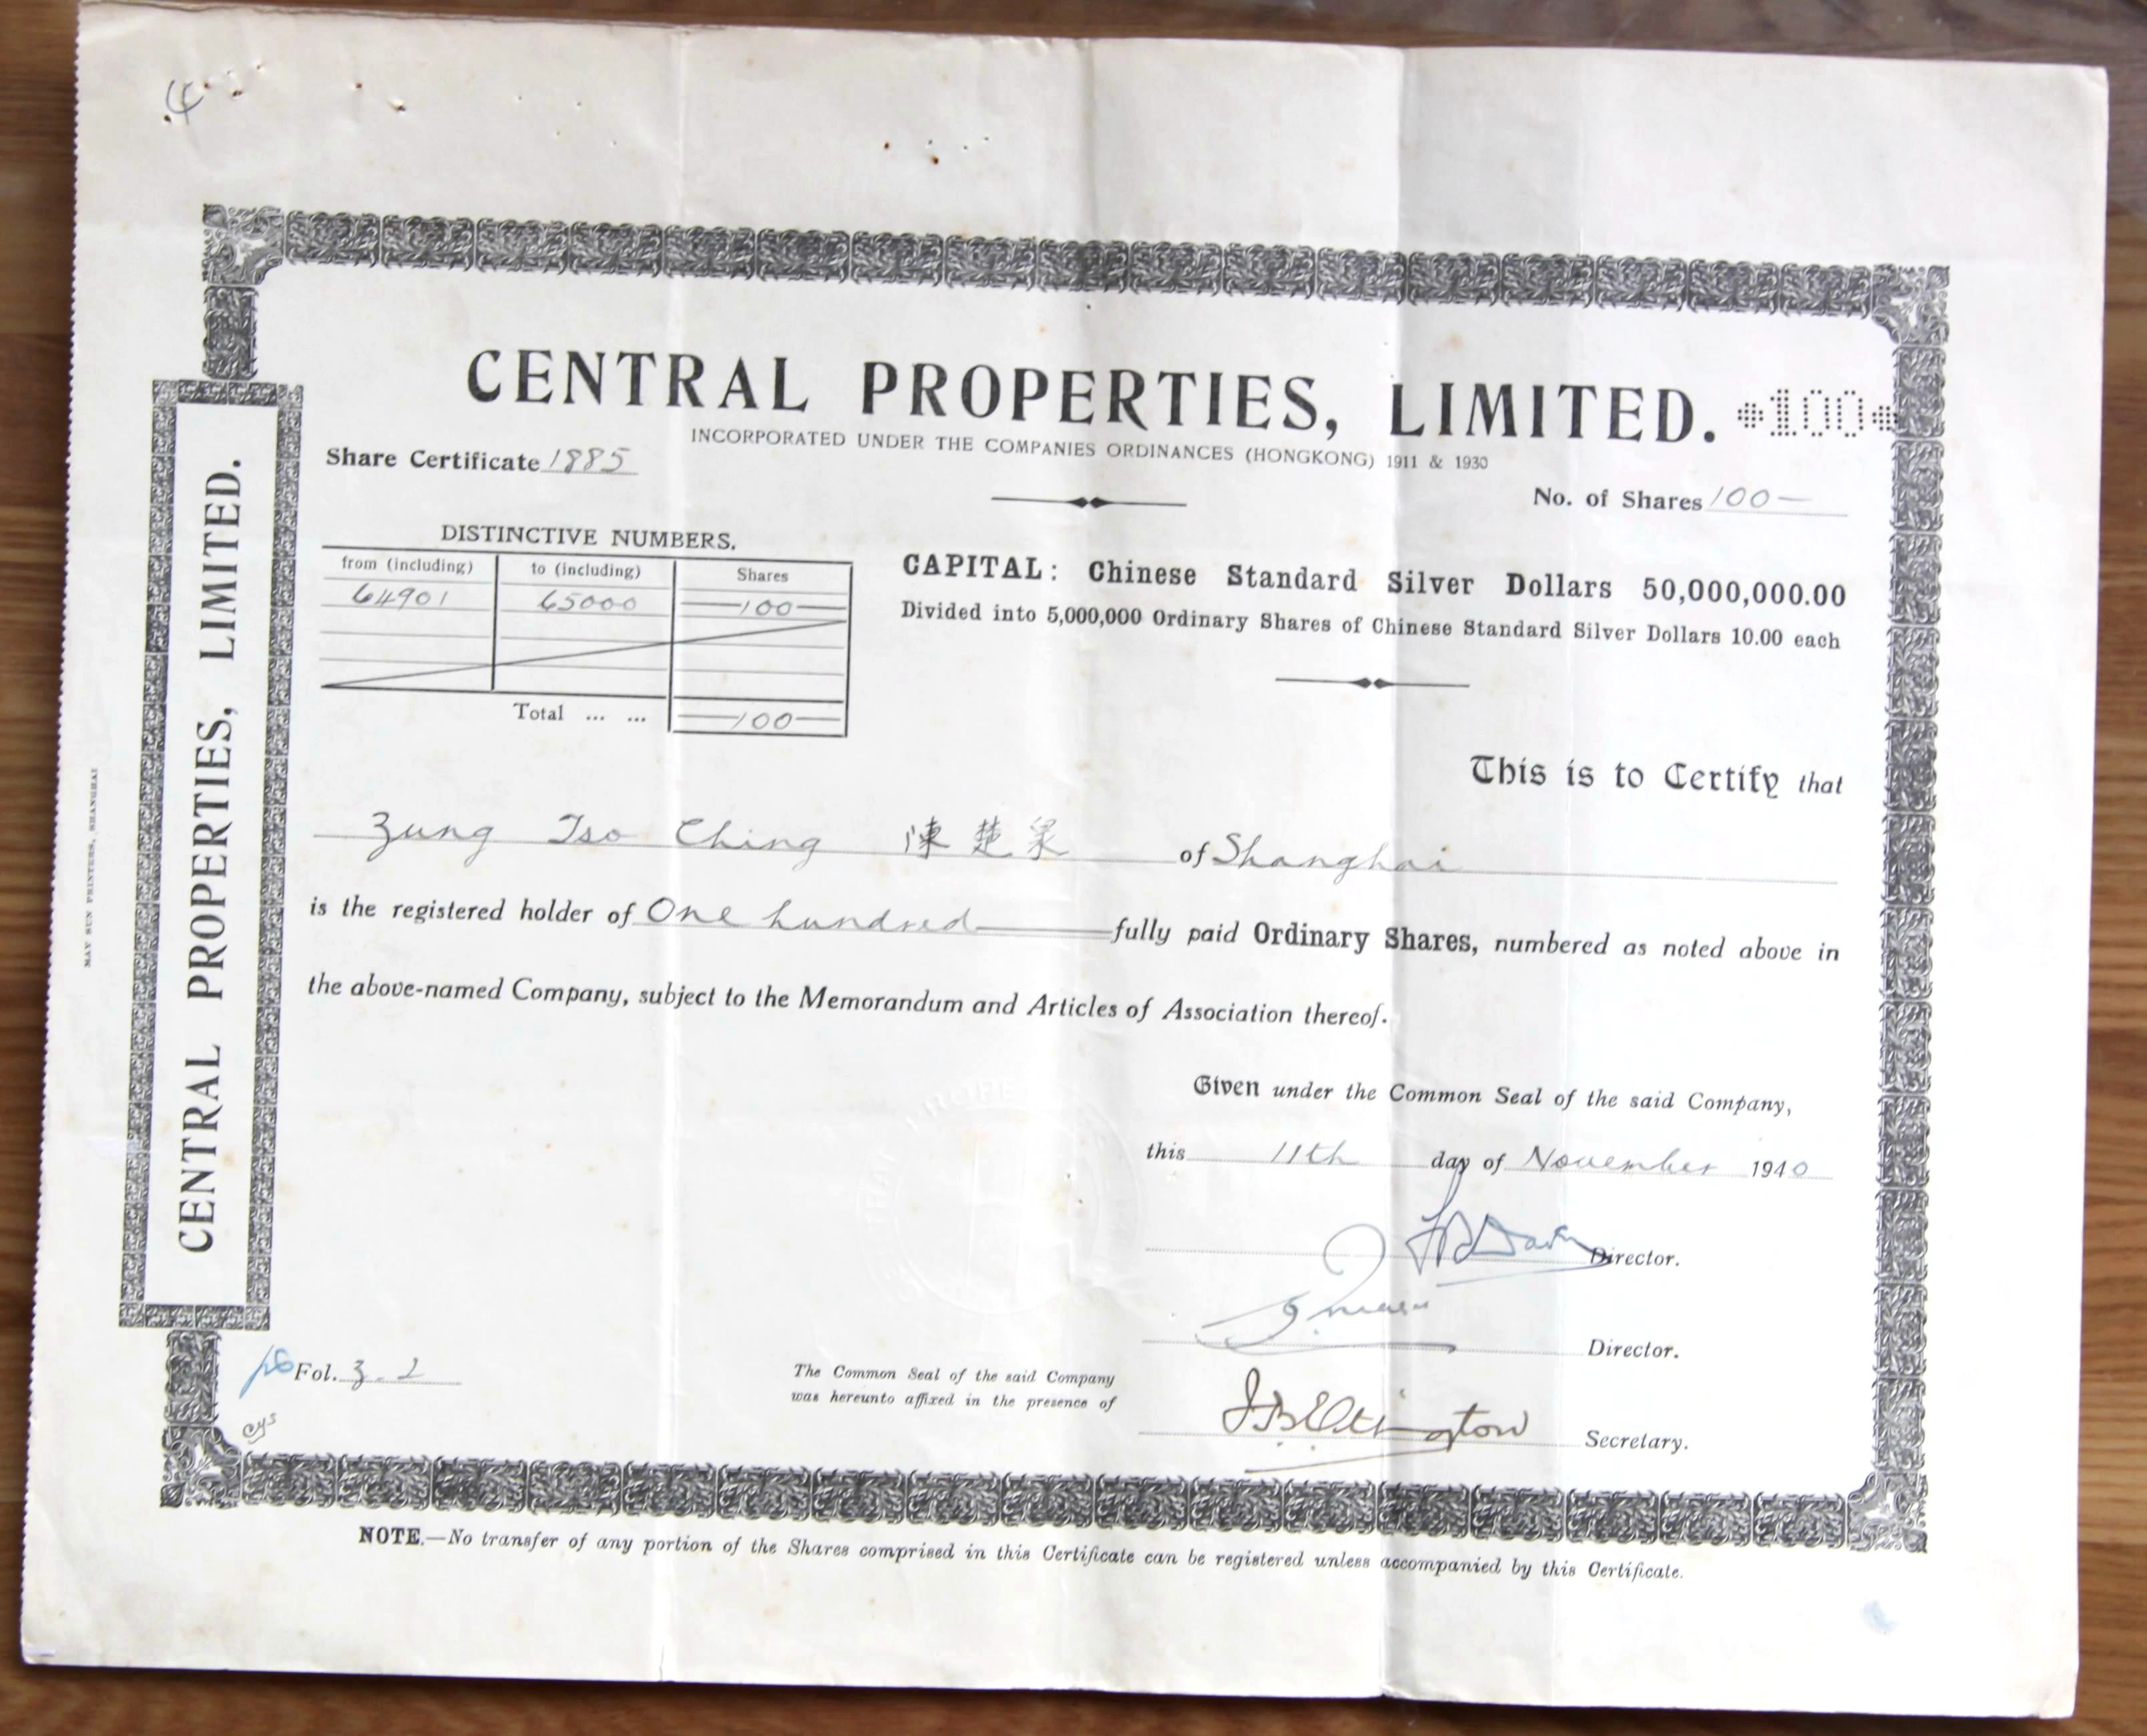 S4049, Central Properties Ltd, Stock Certificate of 100 Shares, Shanghai 1940